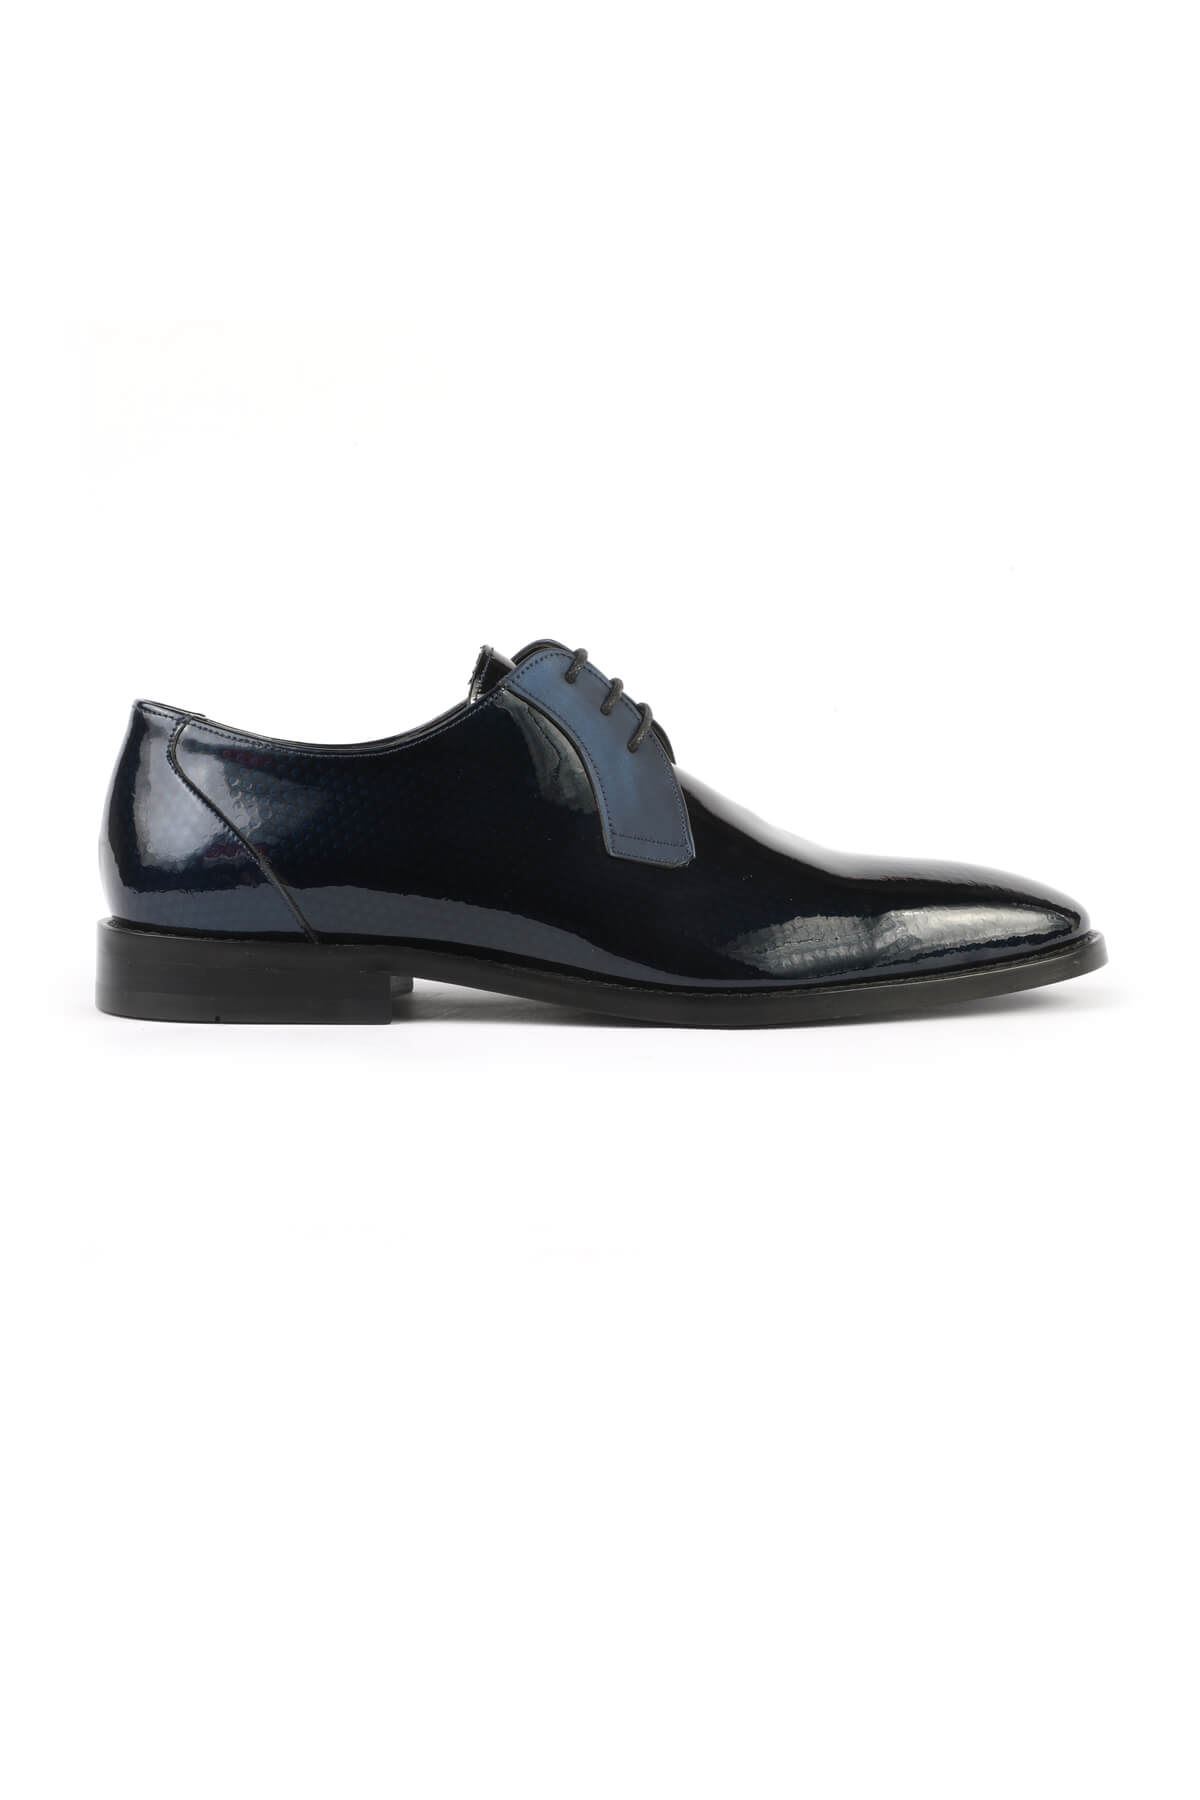 Libero 2724 Navy Blue Classic Shoes